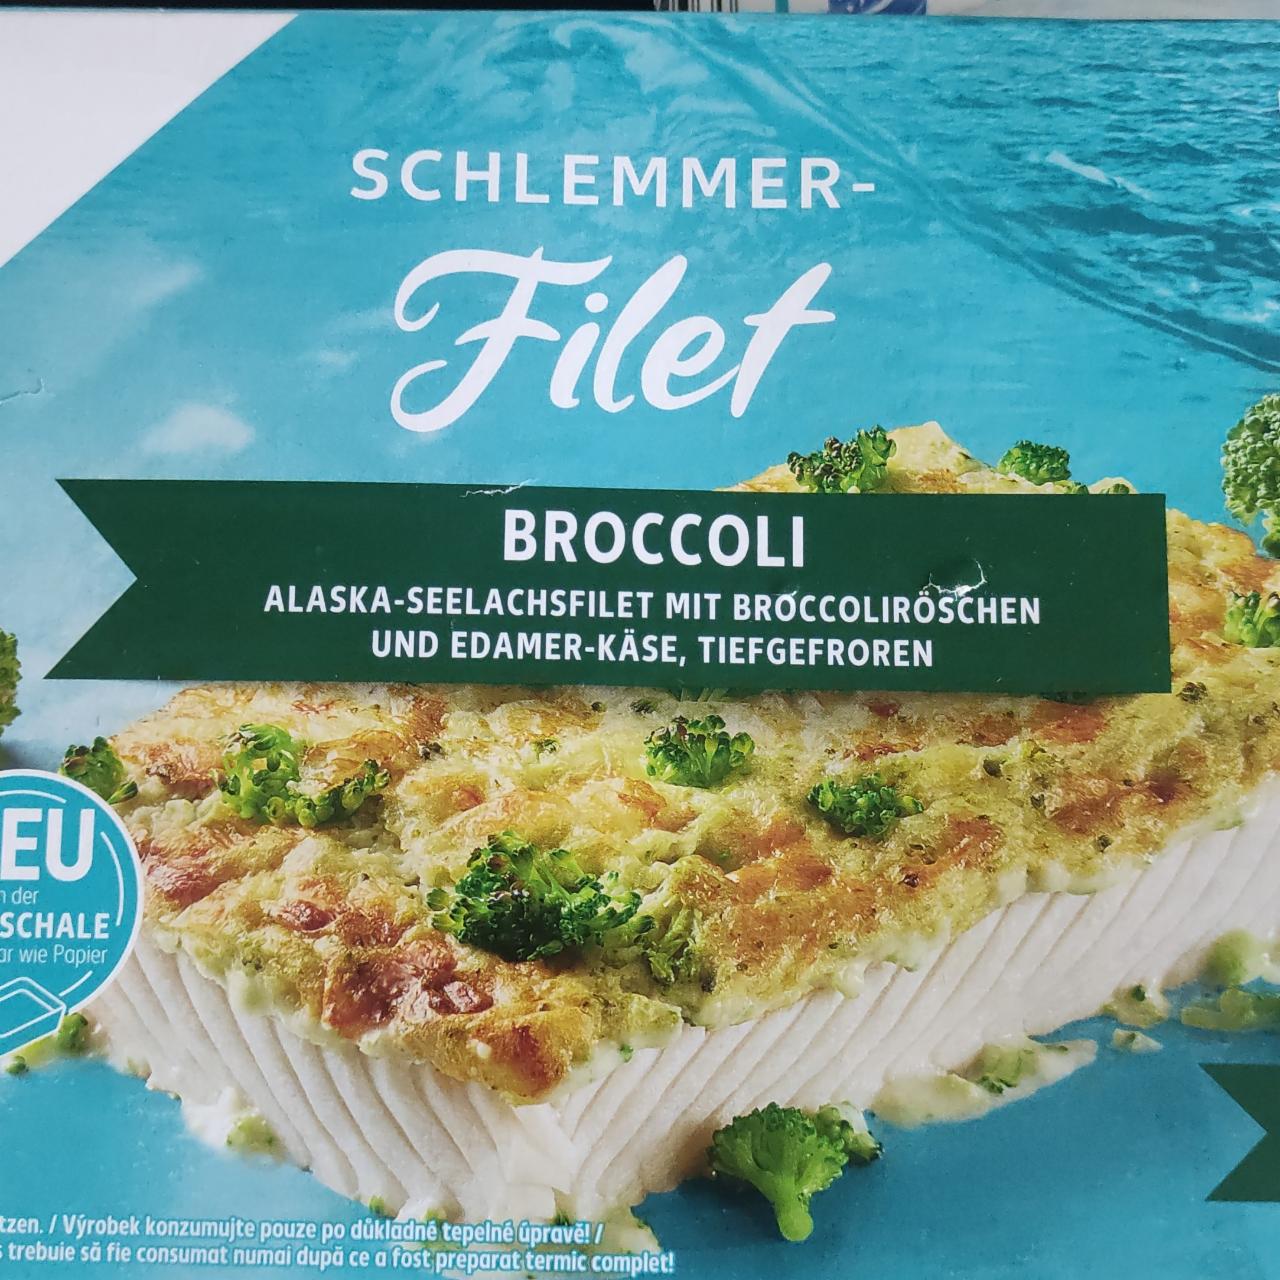 Fotografie - Schlemmerfilet Broccoli K-Classic